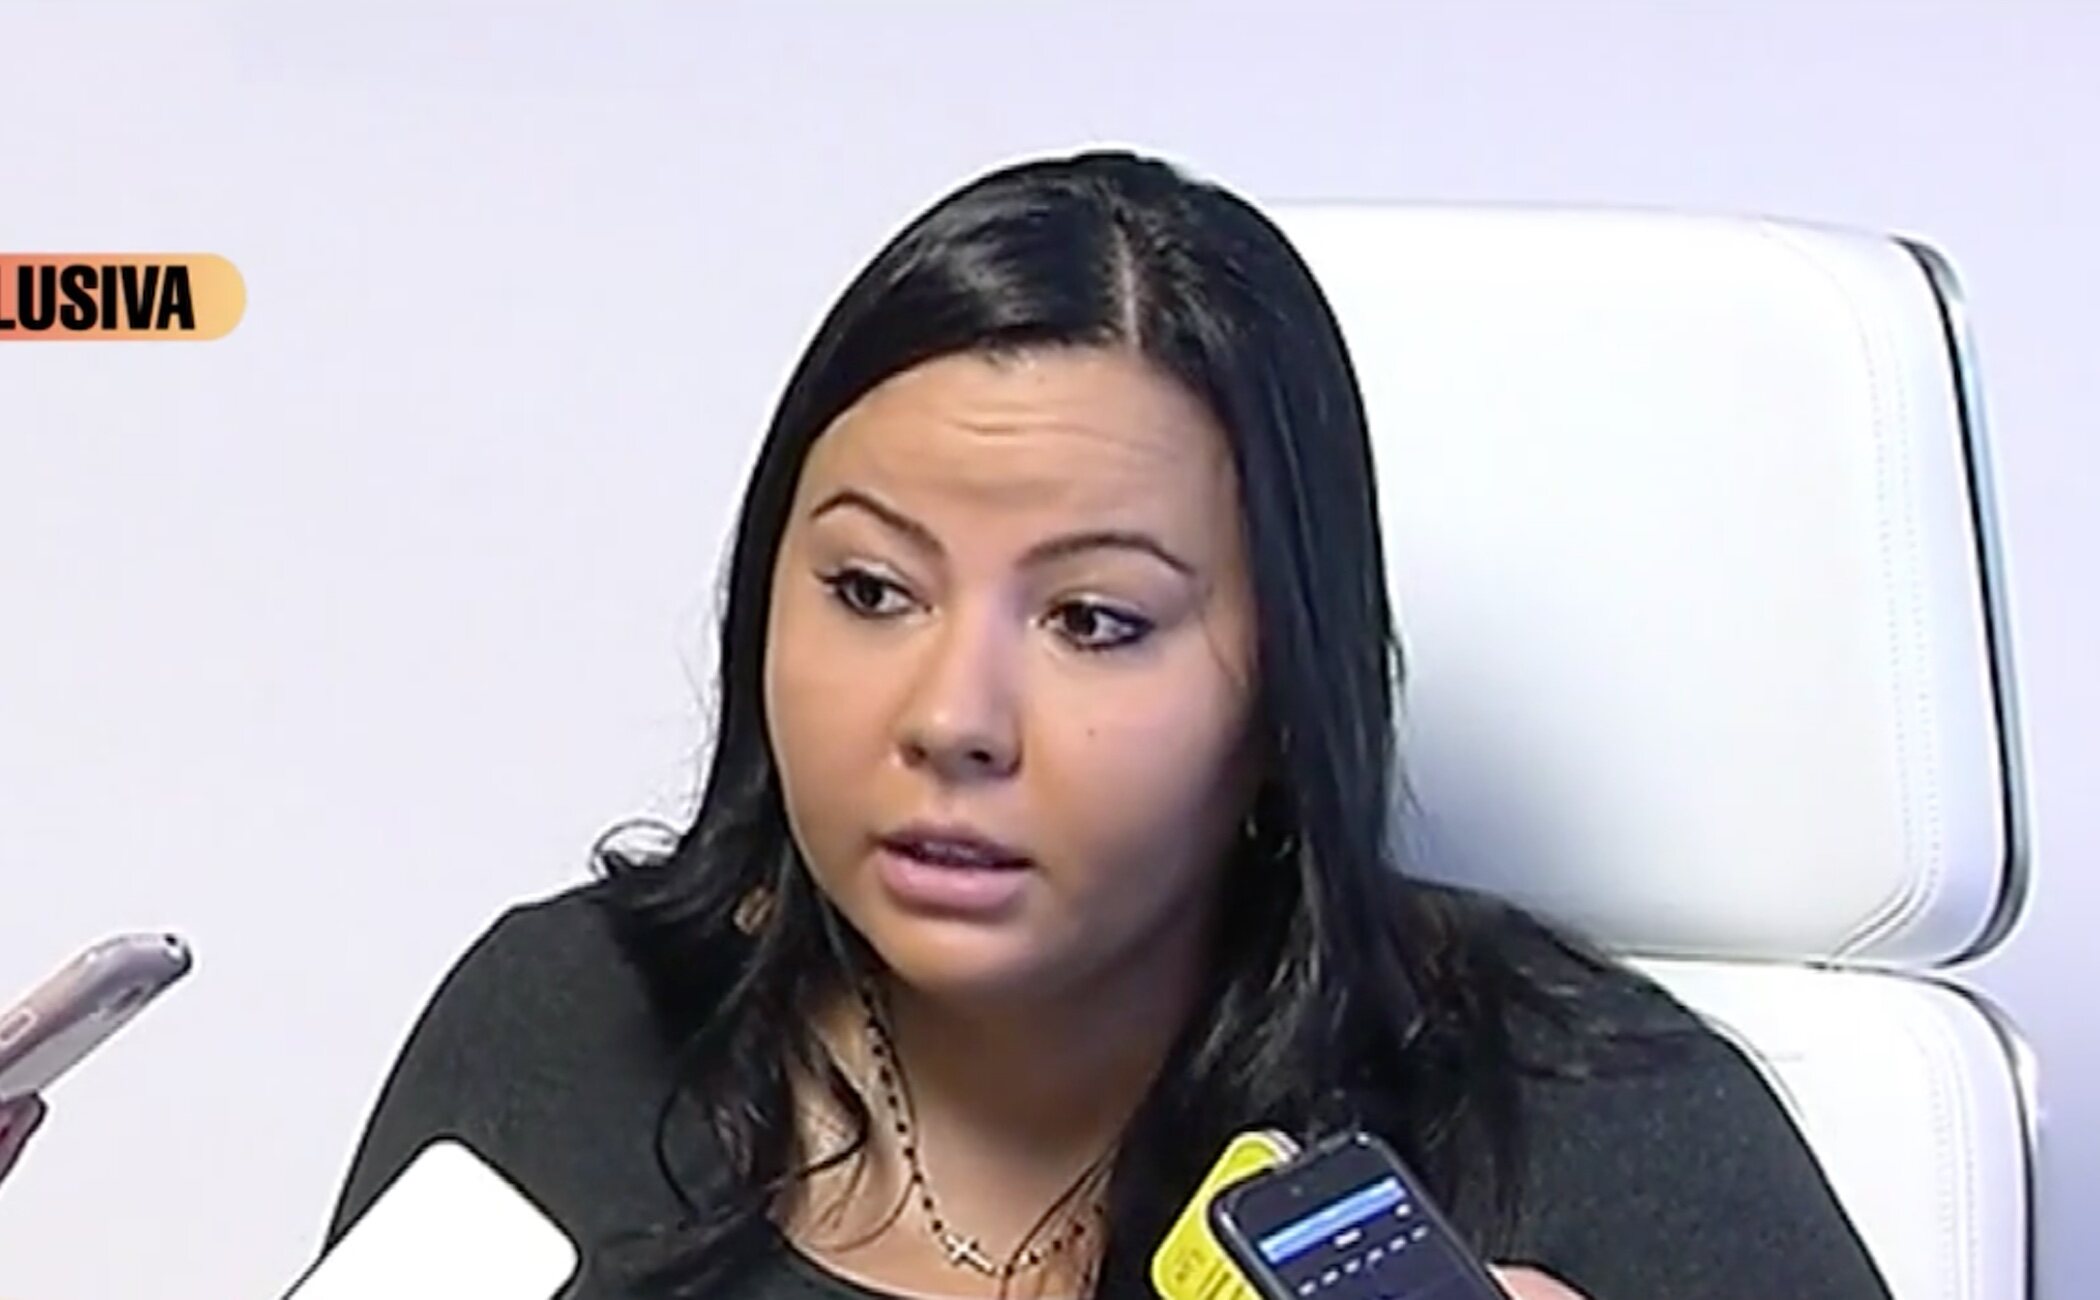 La exmujer de Dani Alves, Dinorah Santana, le demanda: "Para mí él ha muerto"